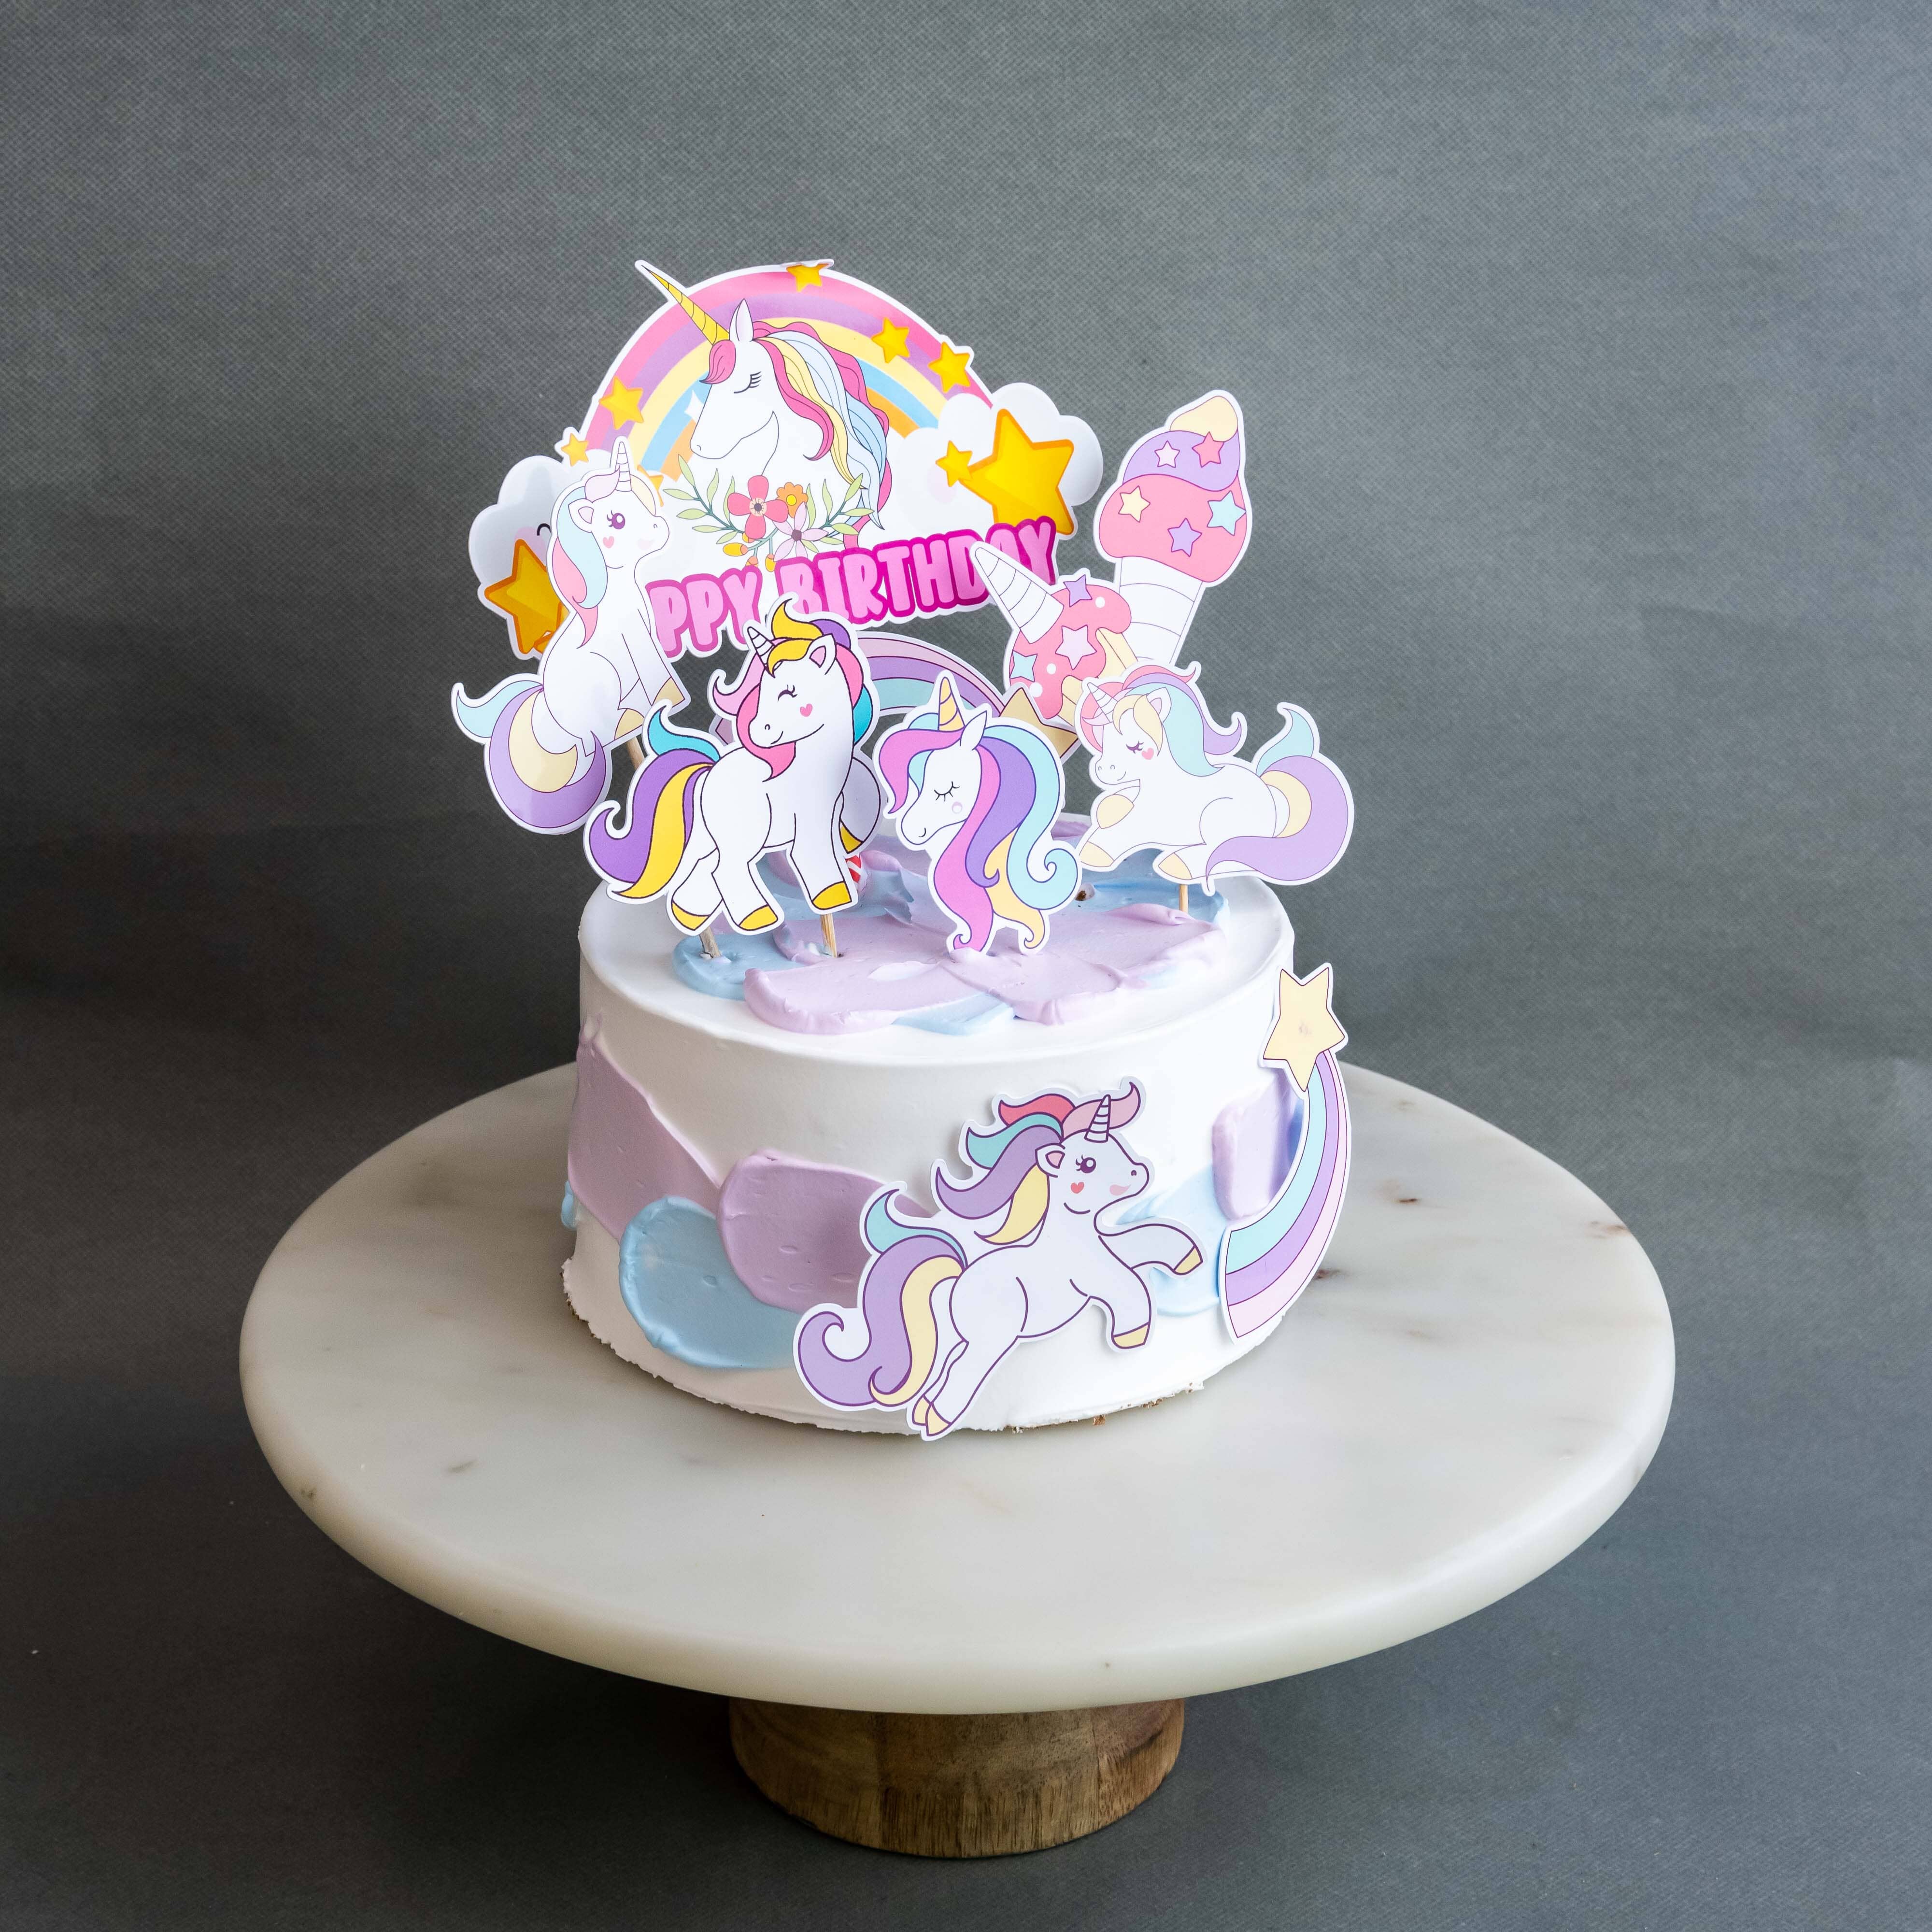 Sugar Candy Balloons and Fondant Unicorn Cake - Dough and Cream